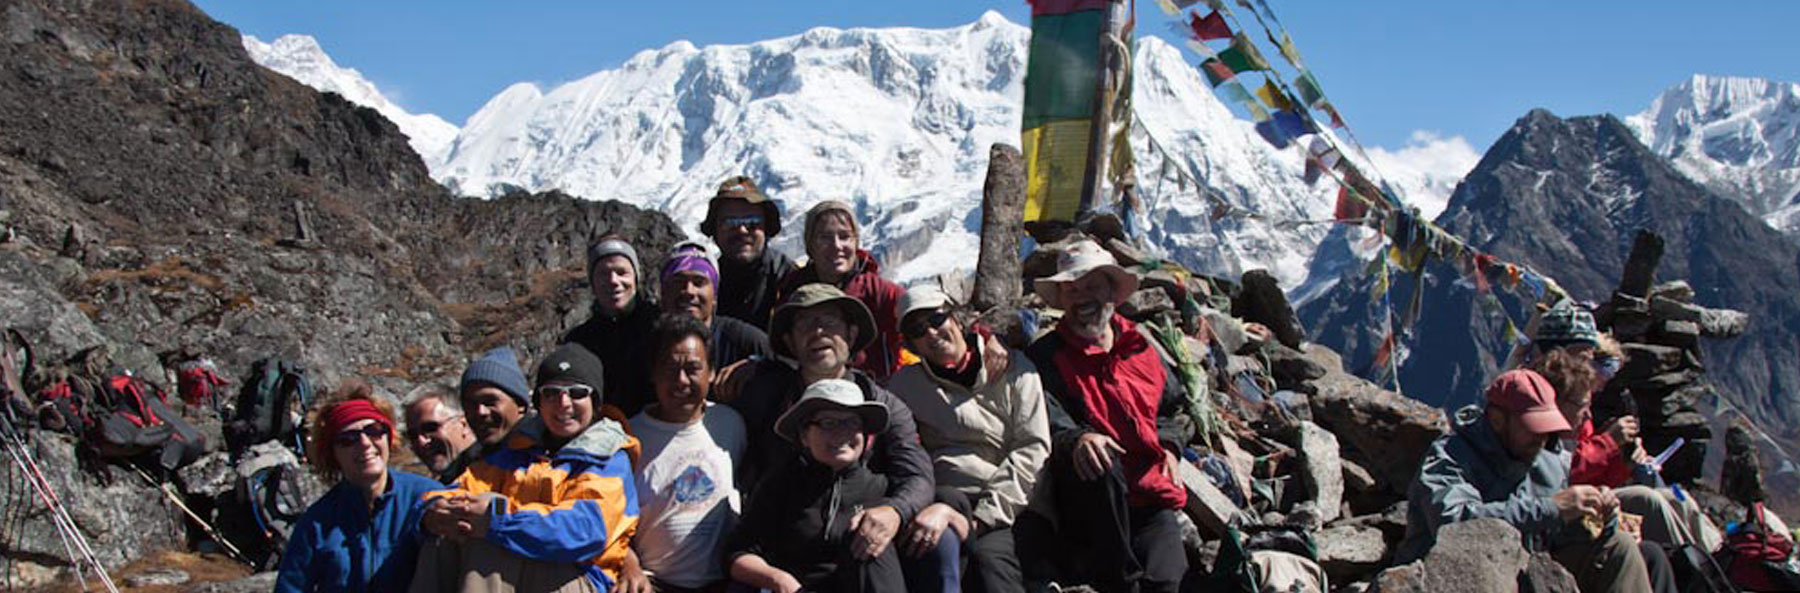 Peak climbing in Nepal 